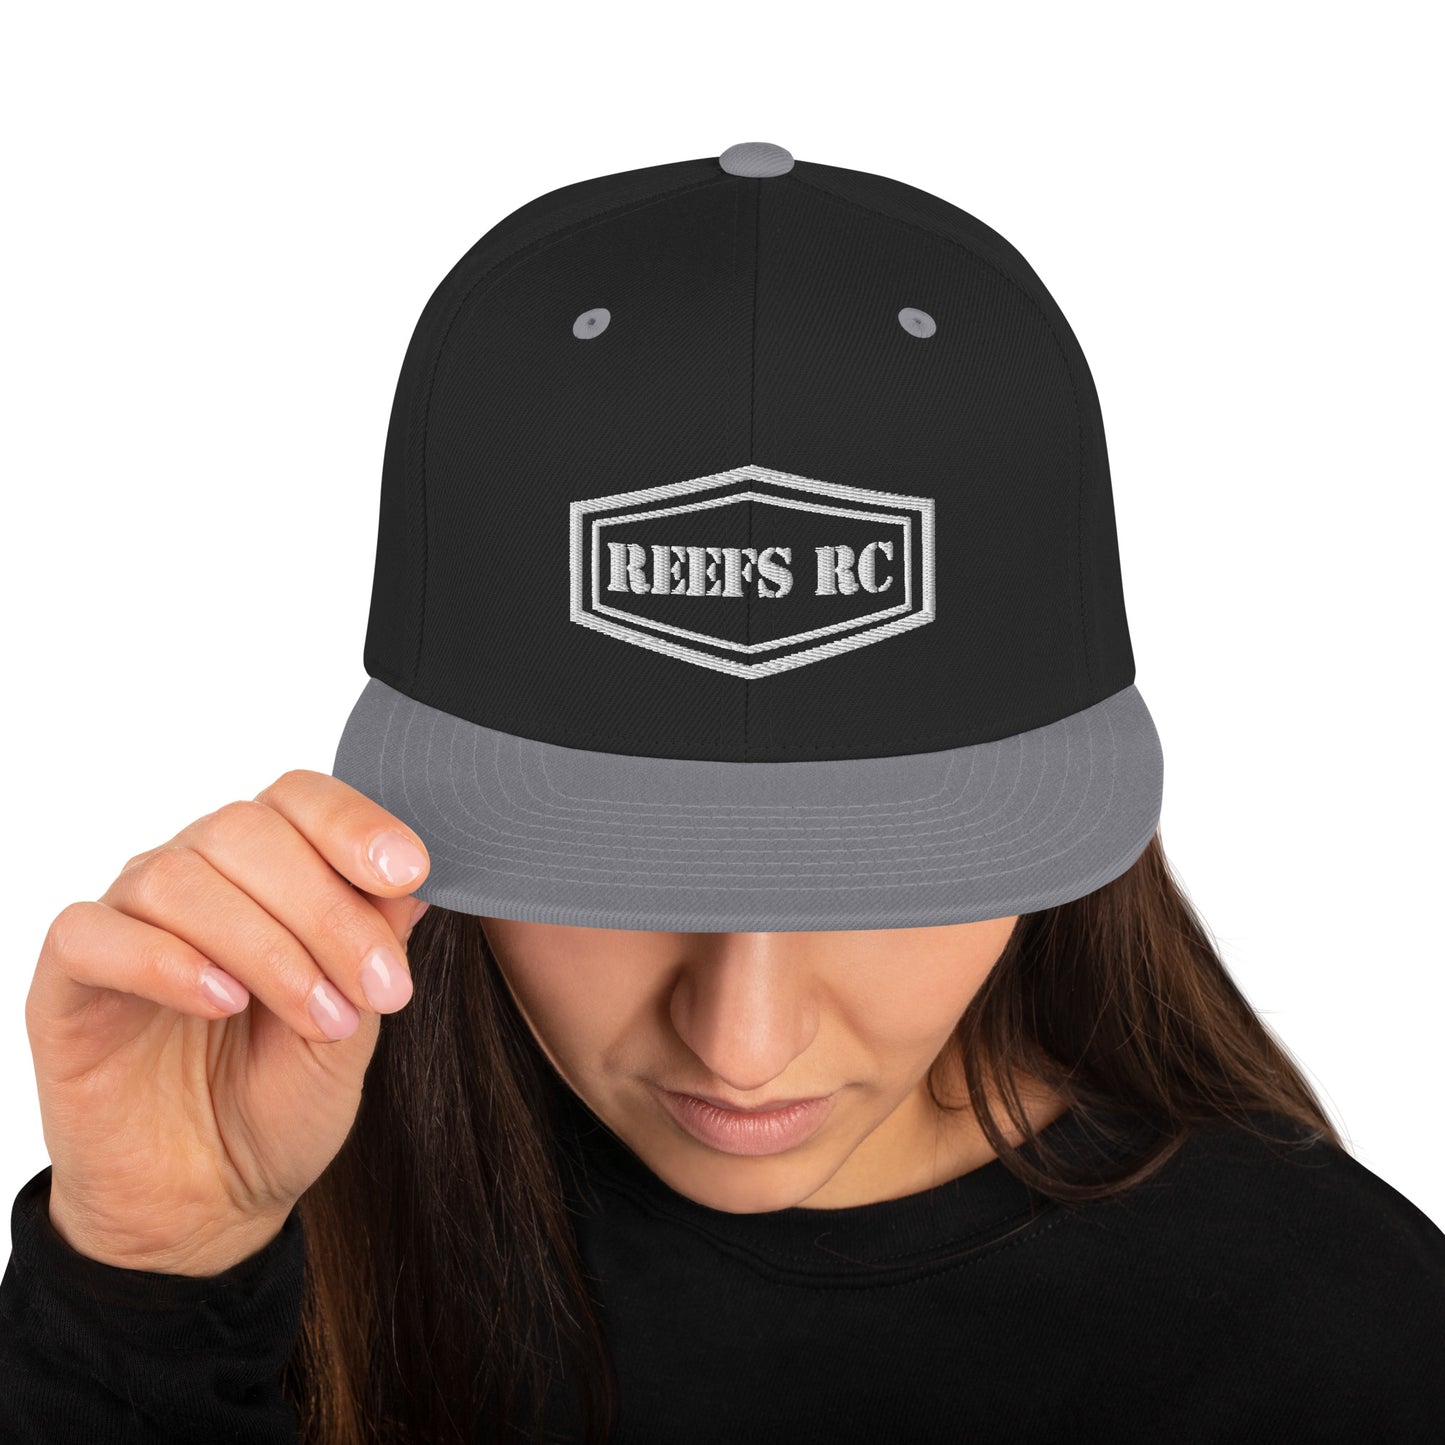 Reefs RC Snapback Hat (Yupoong)